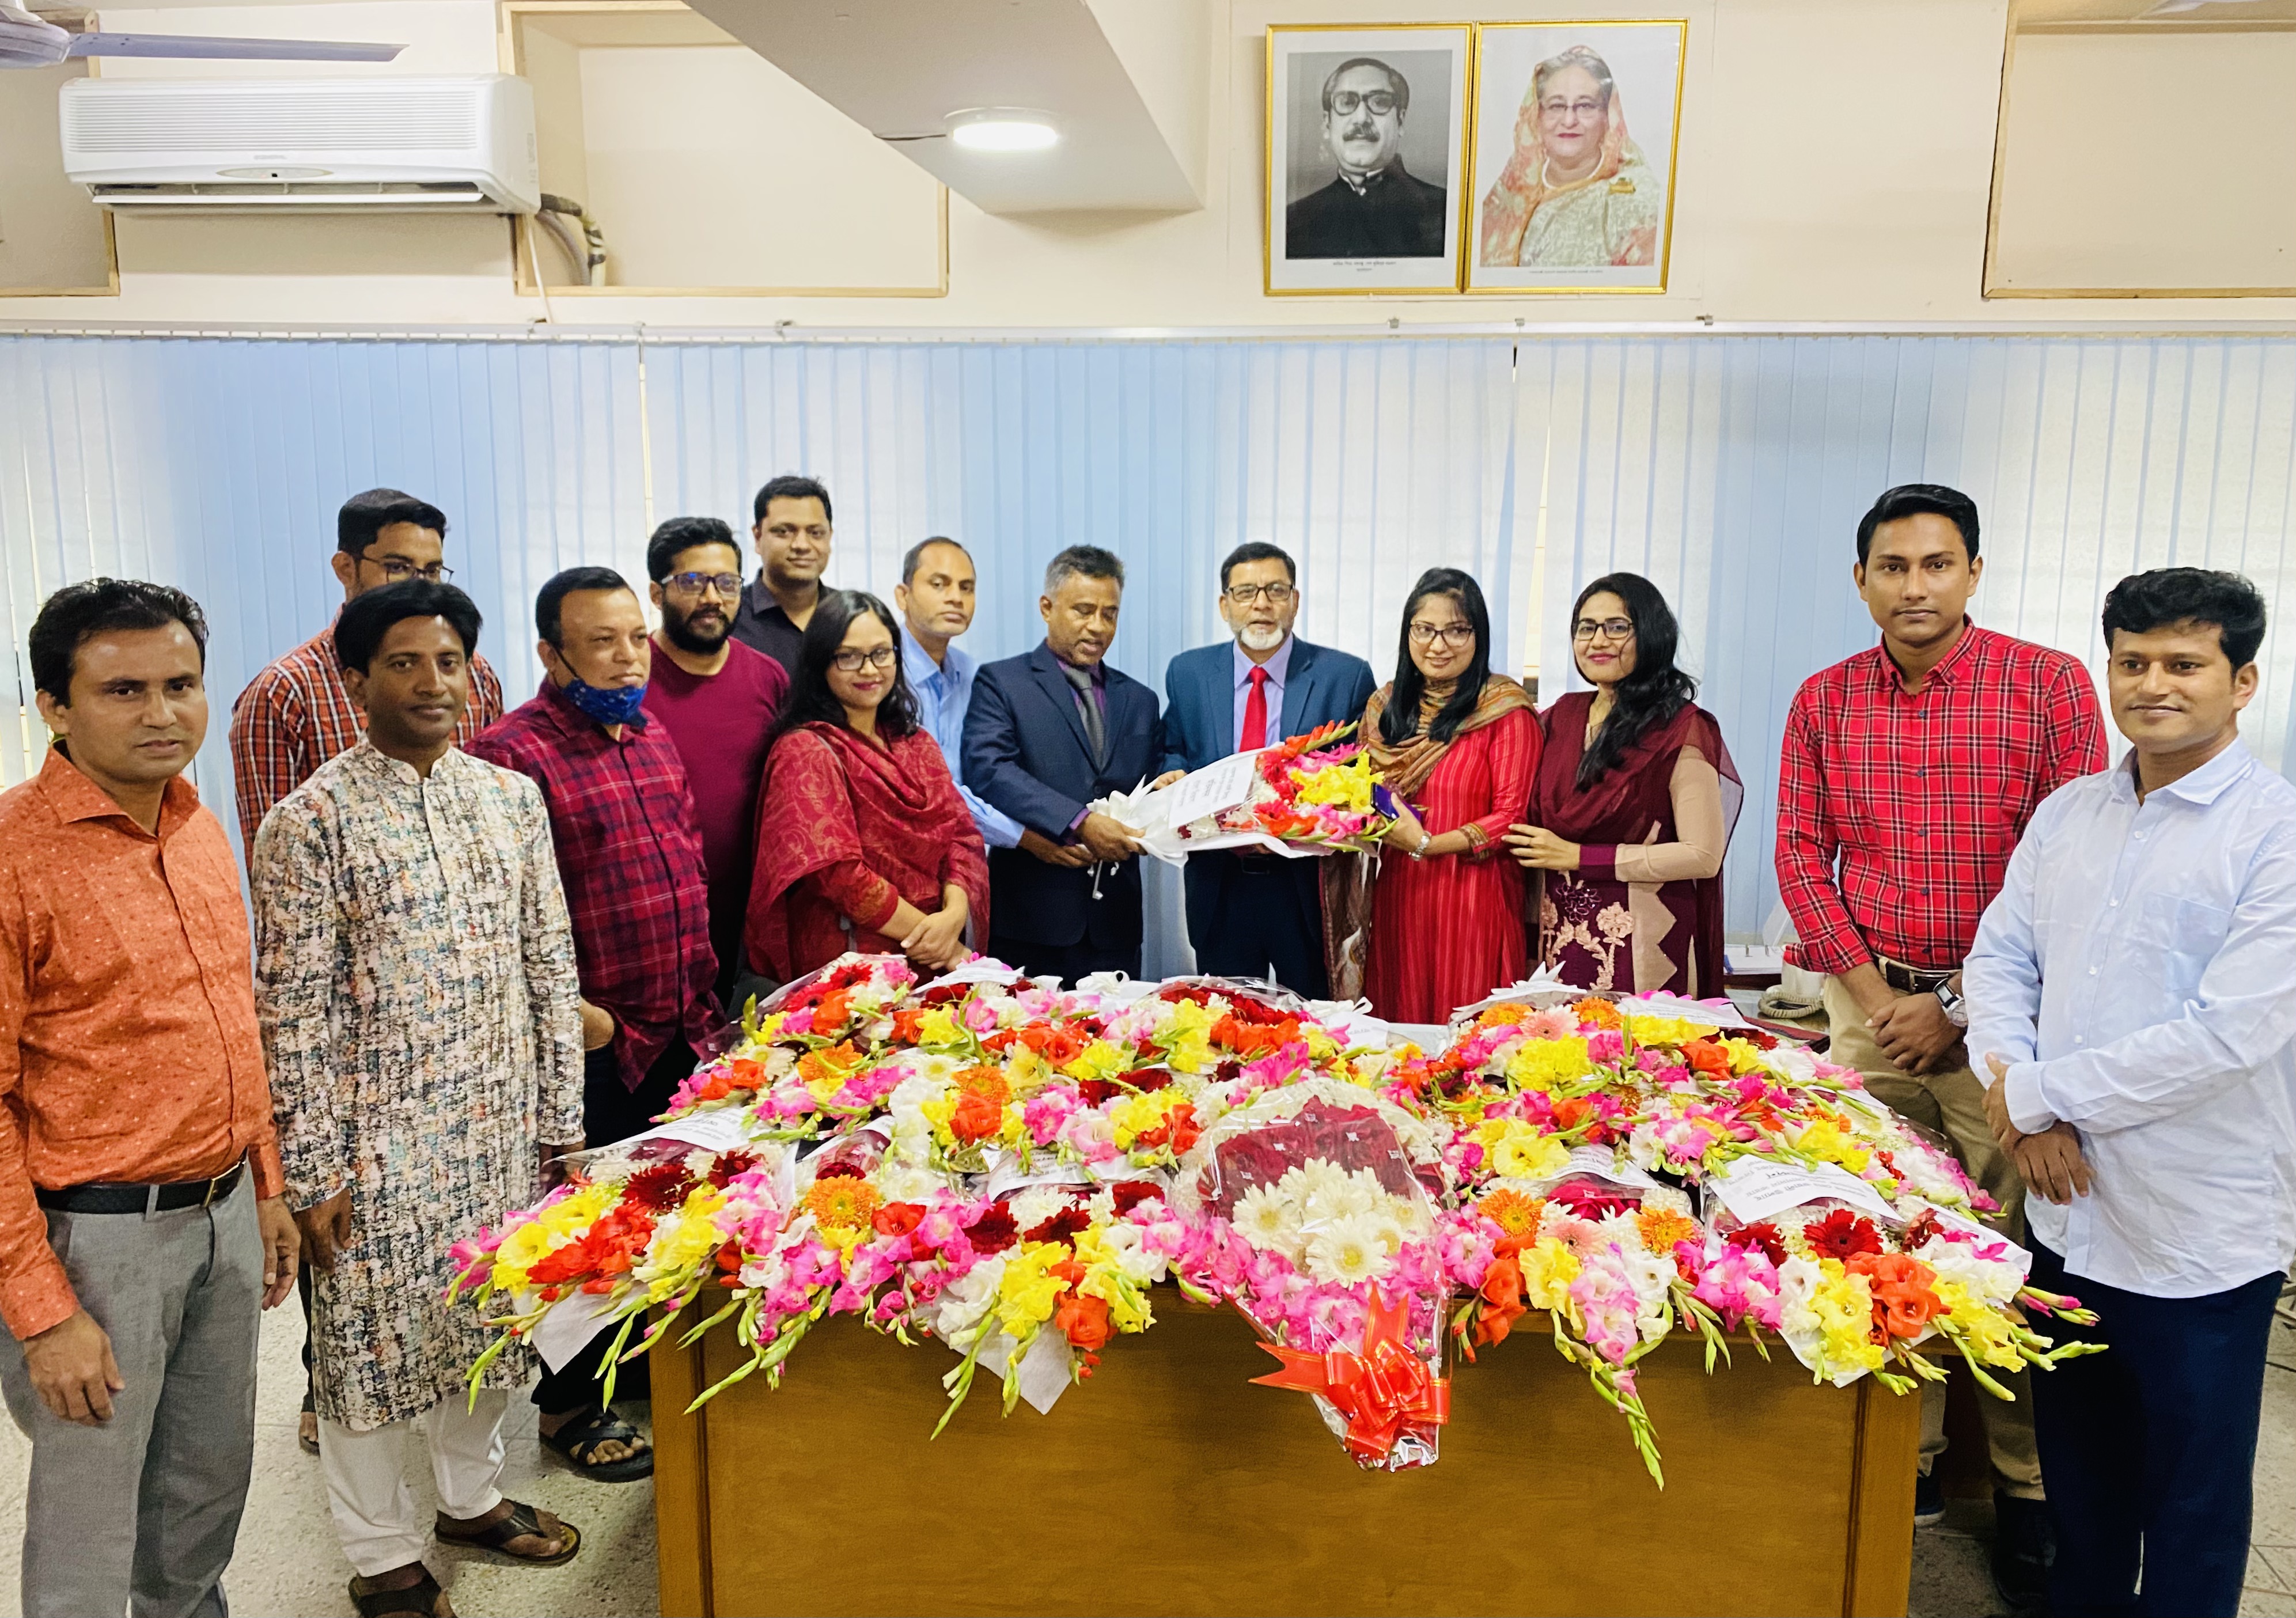 Reception to Vice Principal Prof. Md. Wali Ullah by Bangla Department